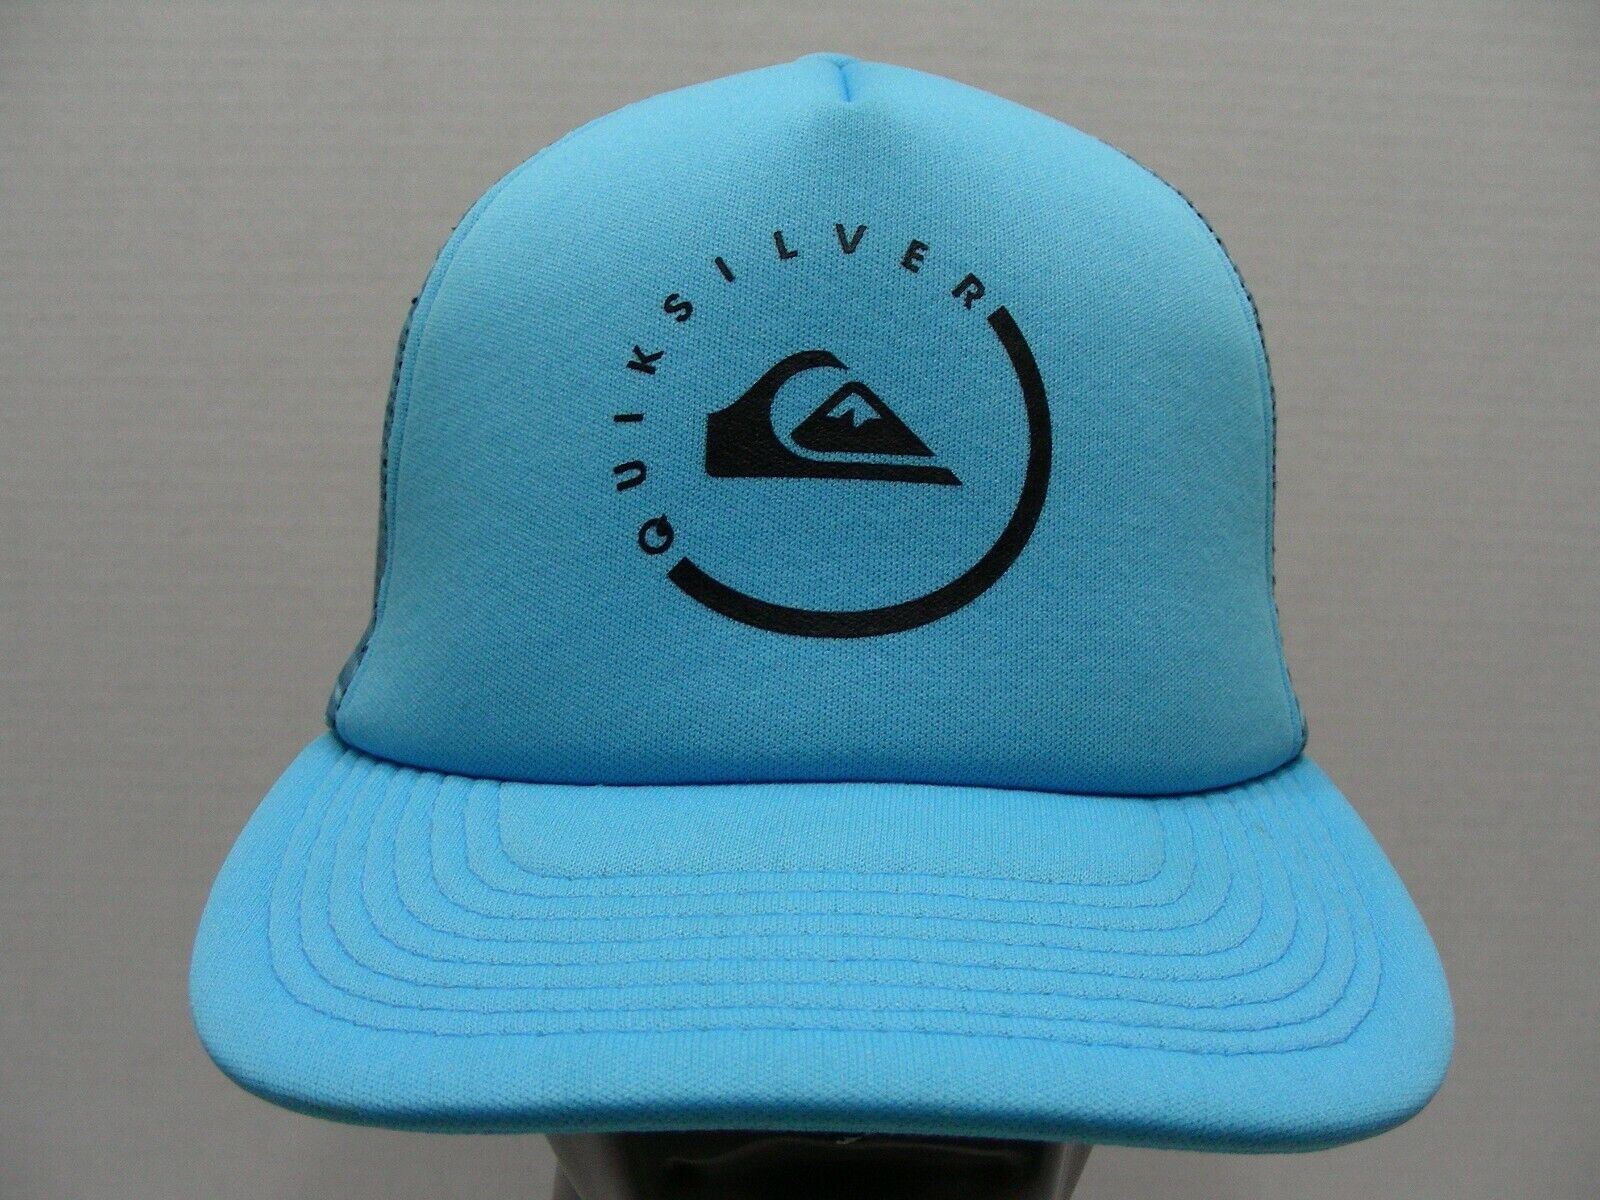 Quiksilver - One Size Adjustable Trucker Style Snapback Ball Cap Hat!